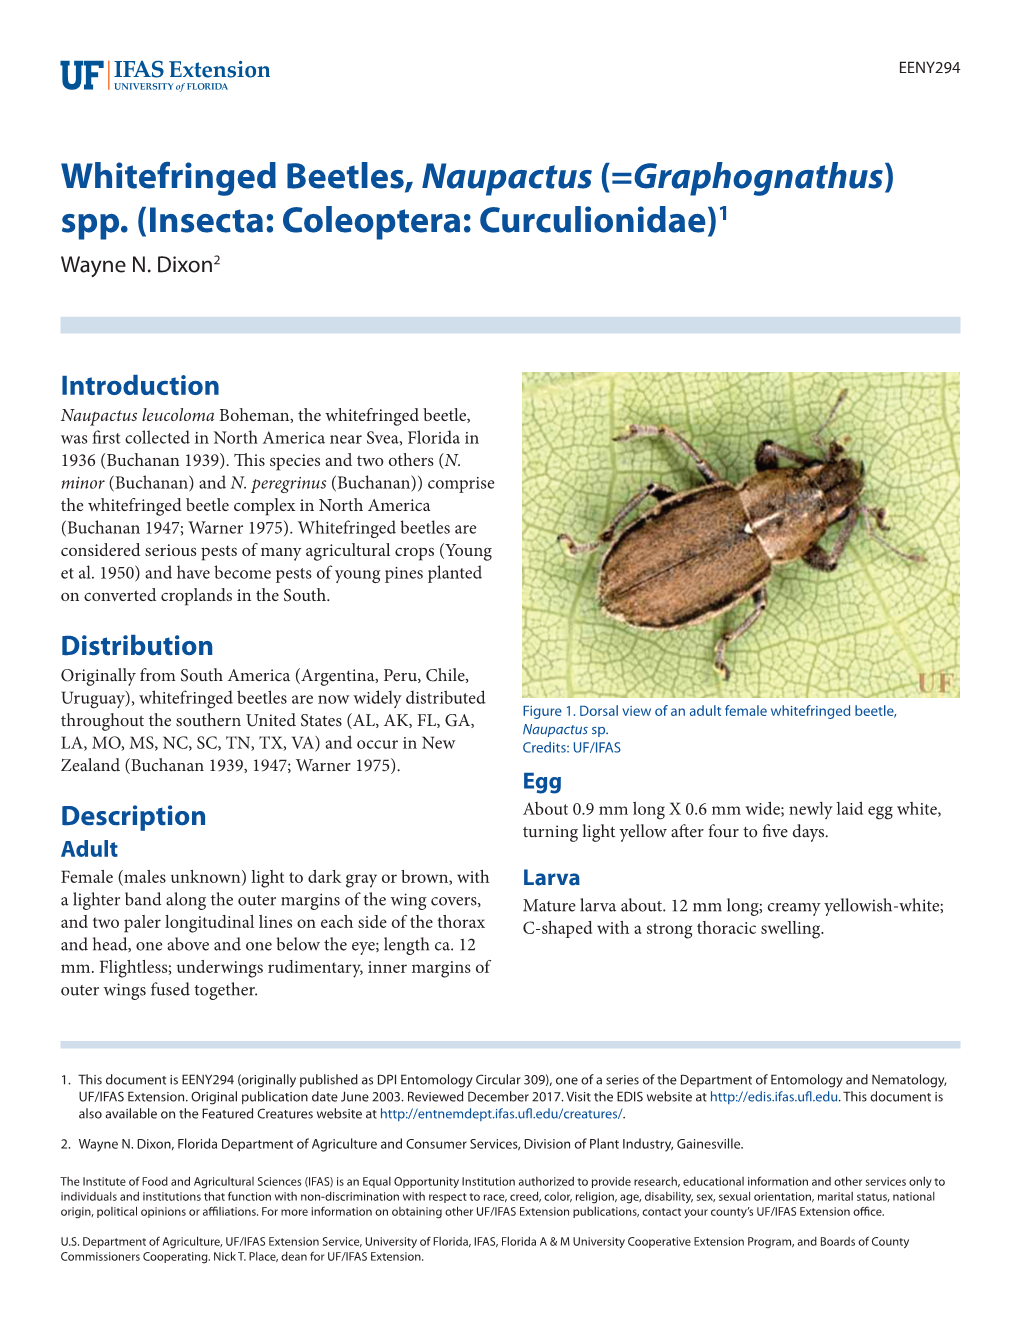 Whitefringed Beetles, Naupactus (=Graphognathus) Spp